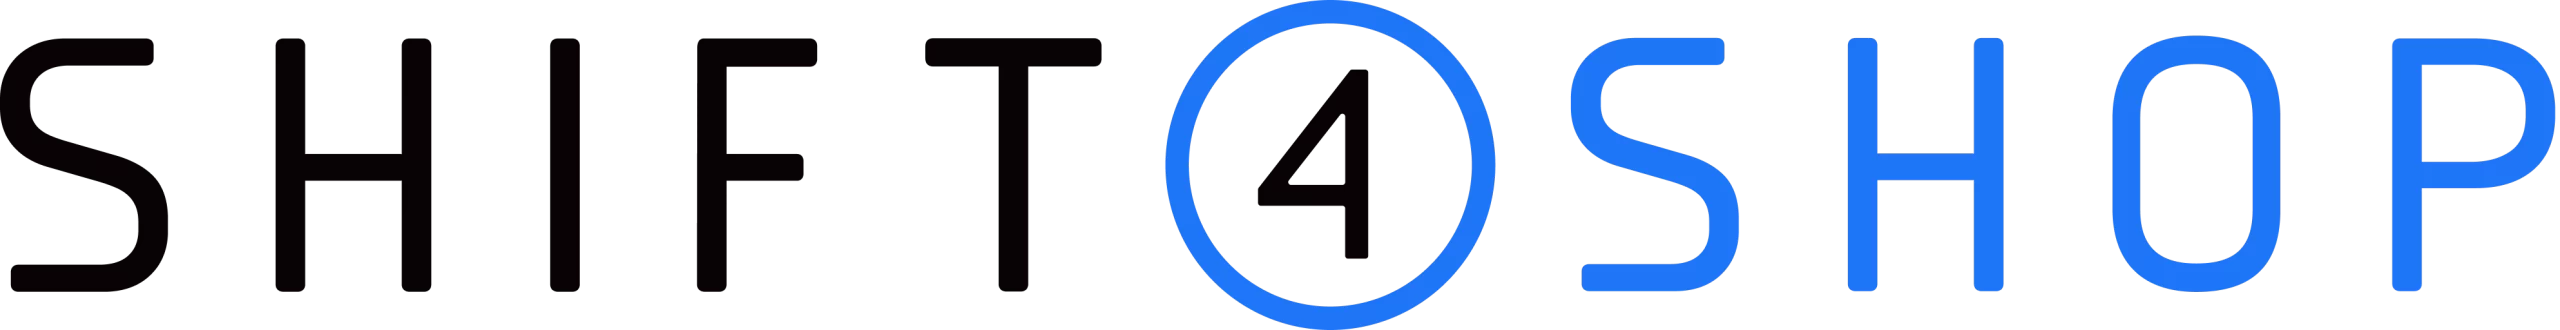 Shift4shop-logo